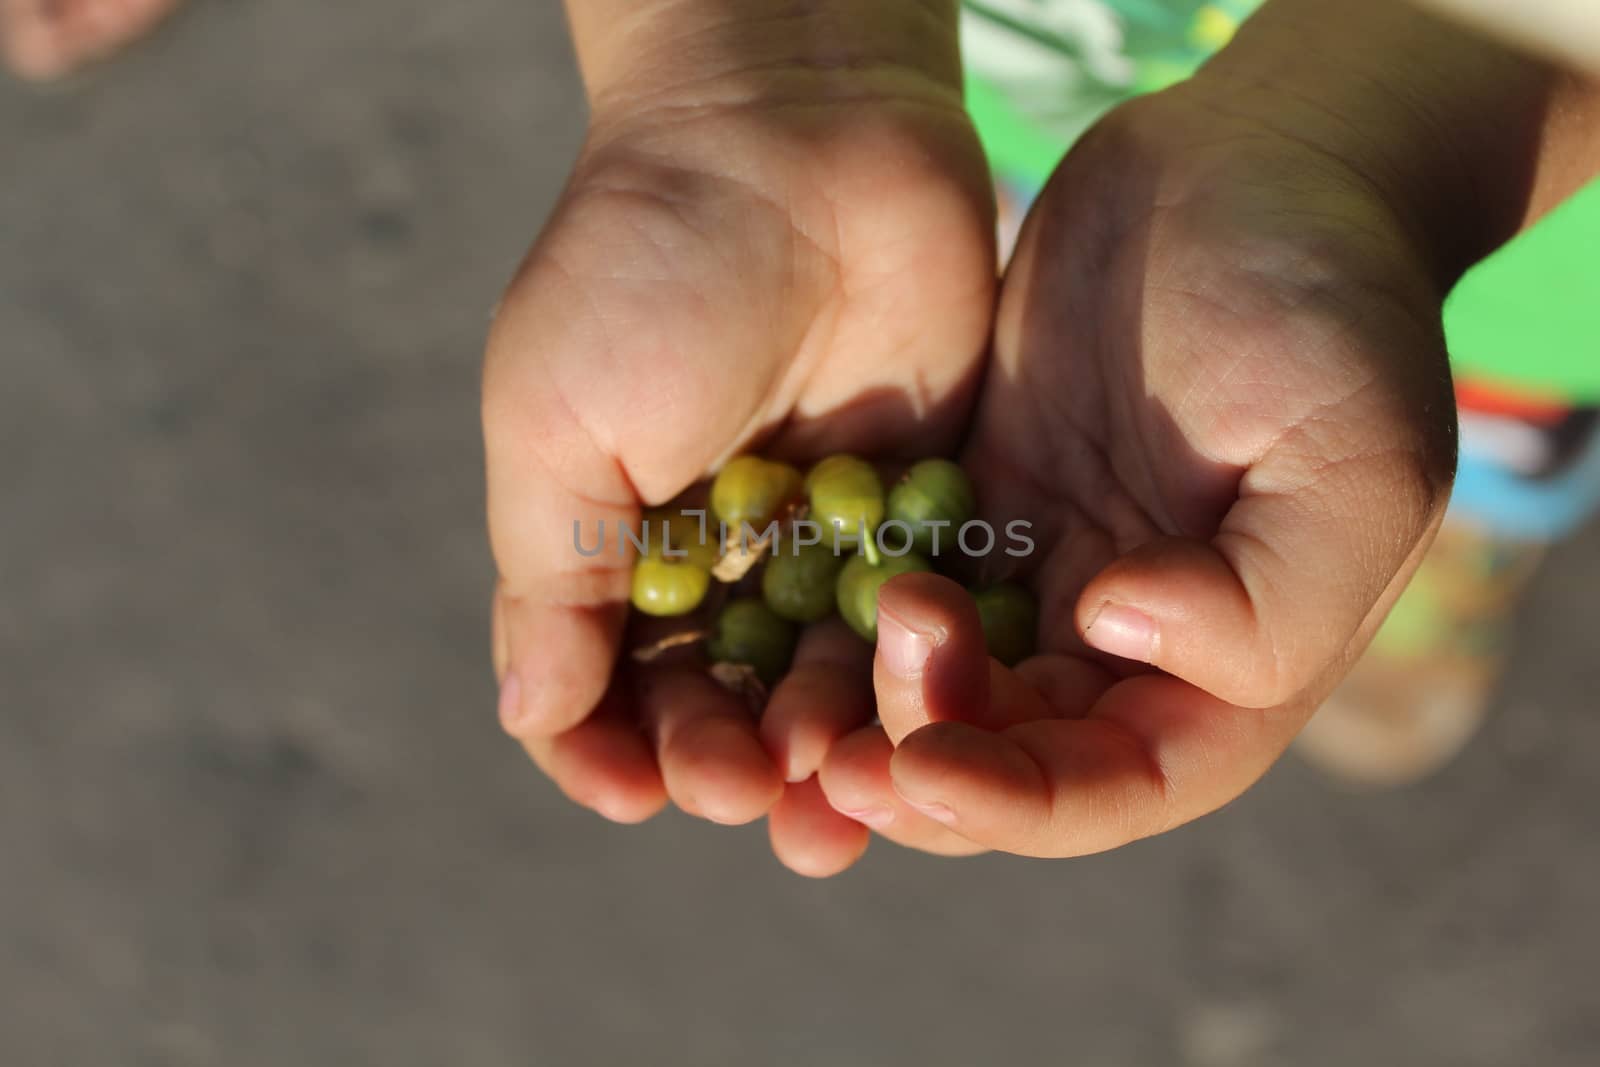 Gooseberries in the children's palm by nurjan100